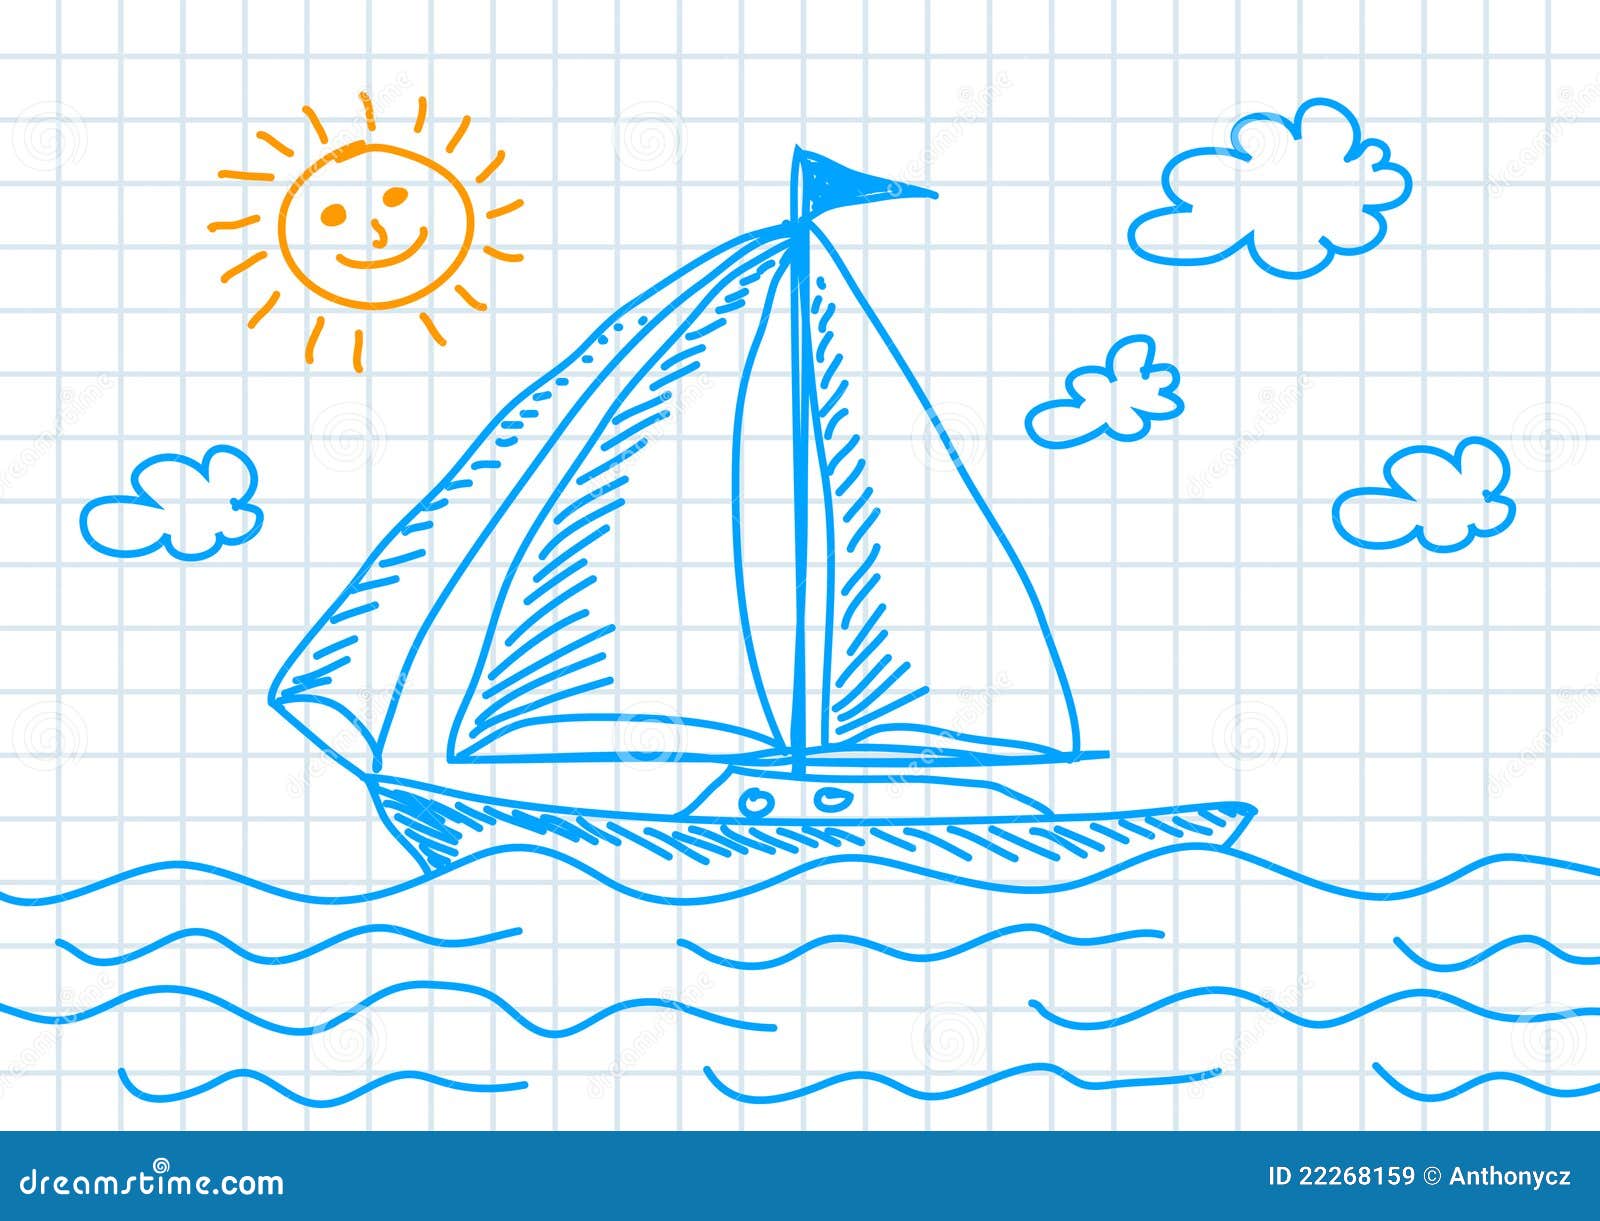 Drawing Of Sailboat Royalty Free Stock Images - Image: 22268159